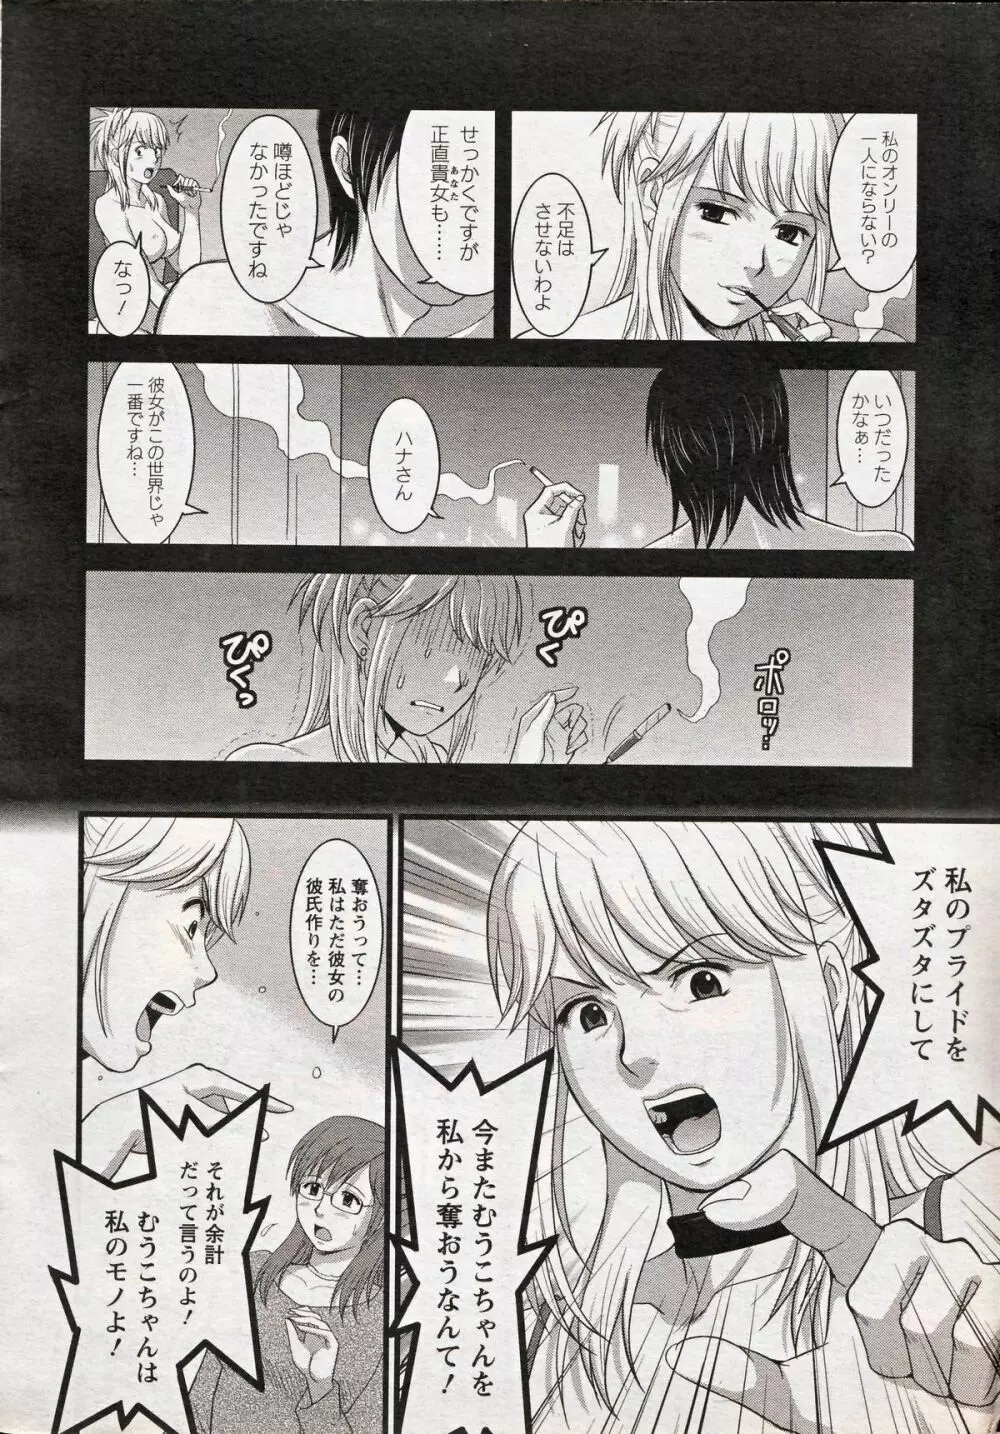 Haken no Muuko-san 13 10ページ